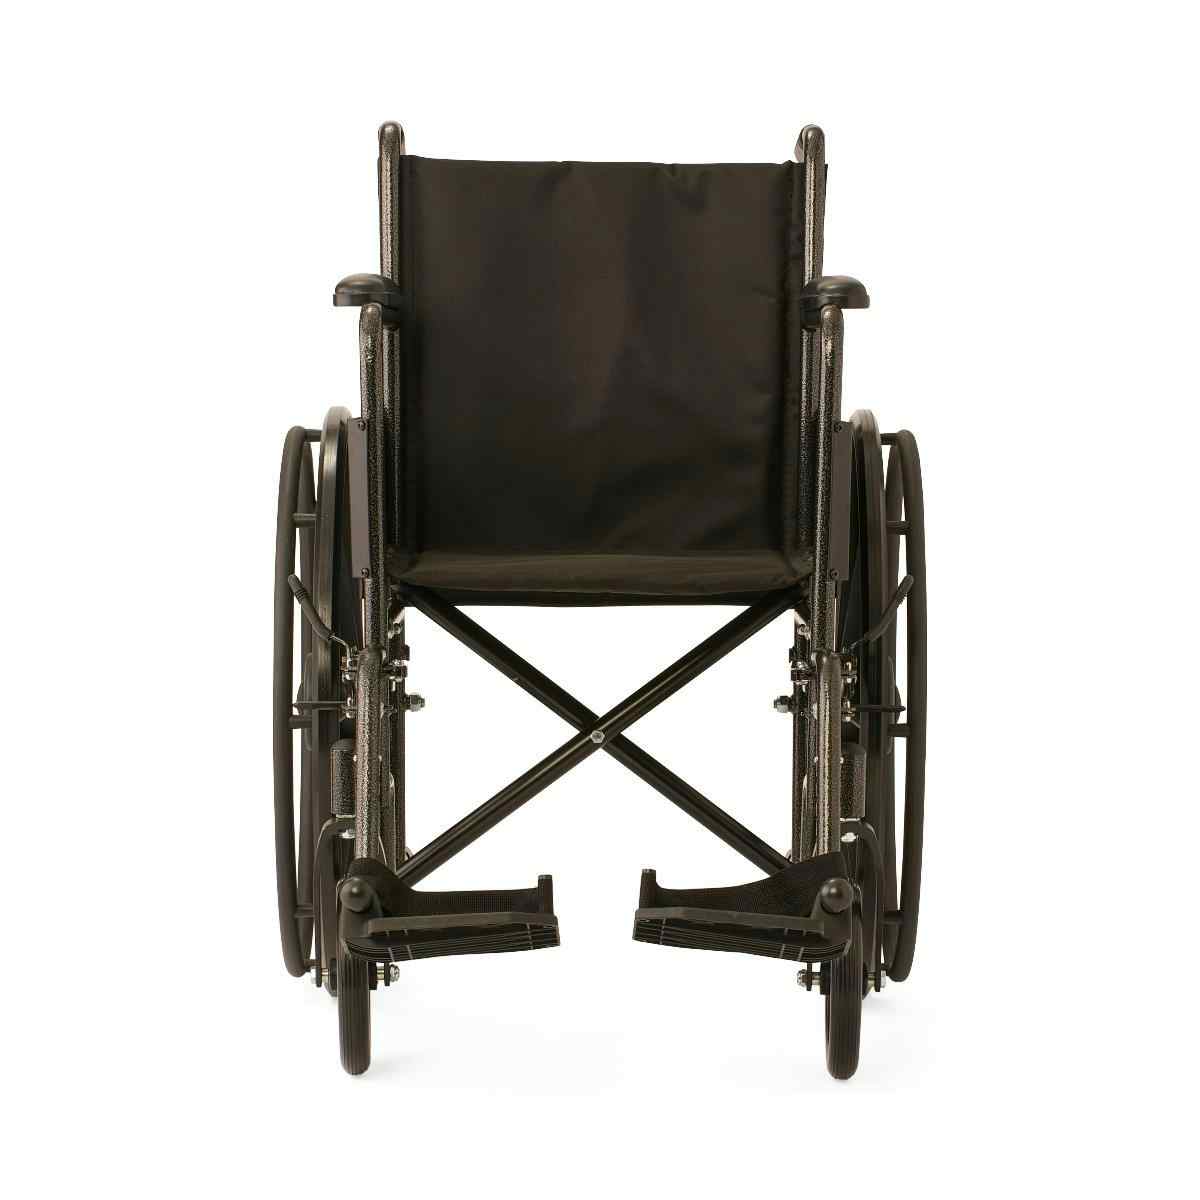 Medline K1 Wheelchair, Full-Length Permanent Arms, Swing-Away Foot Rests, 18", K1186N13S, 1 Each